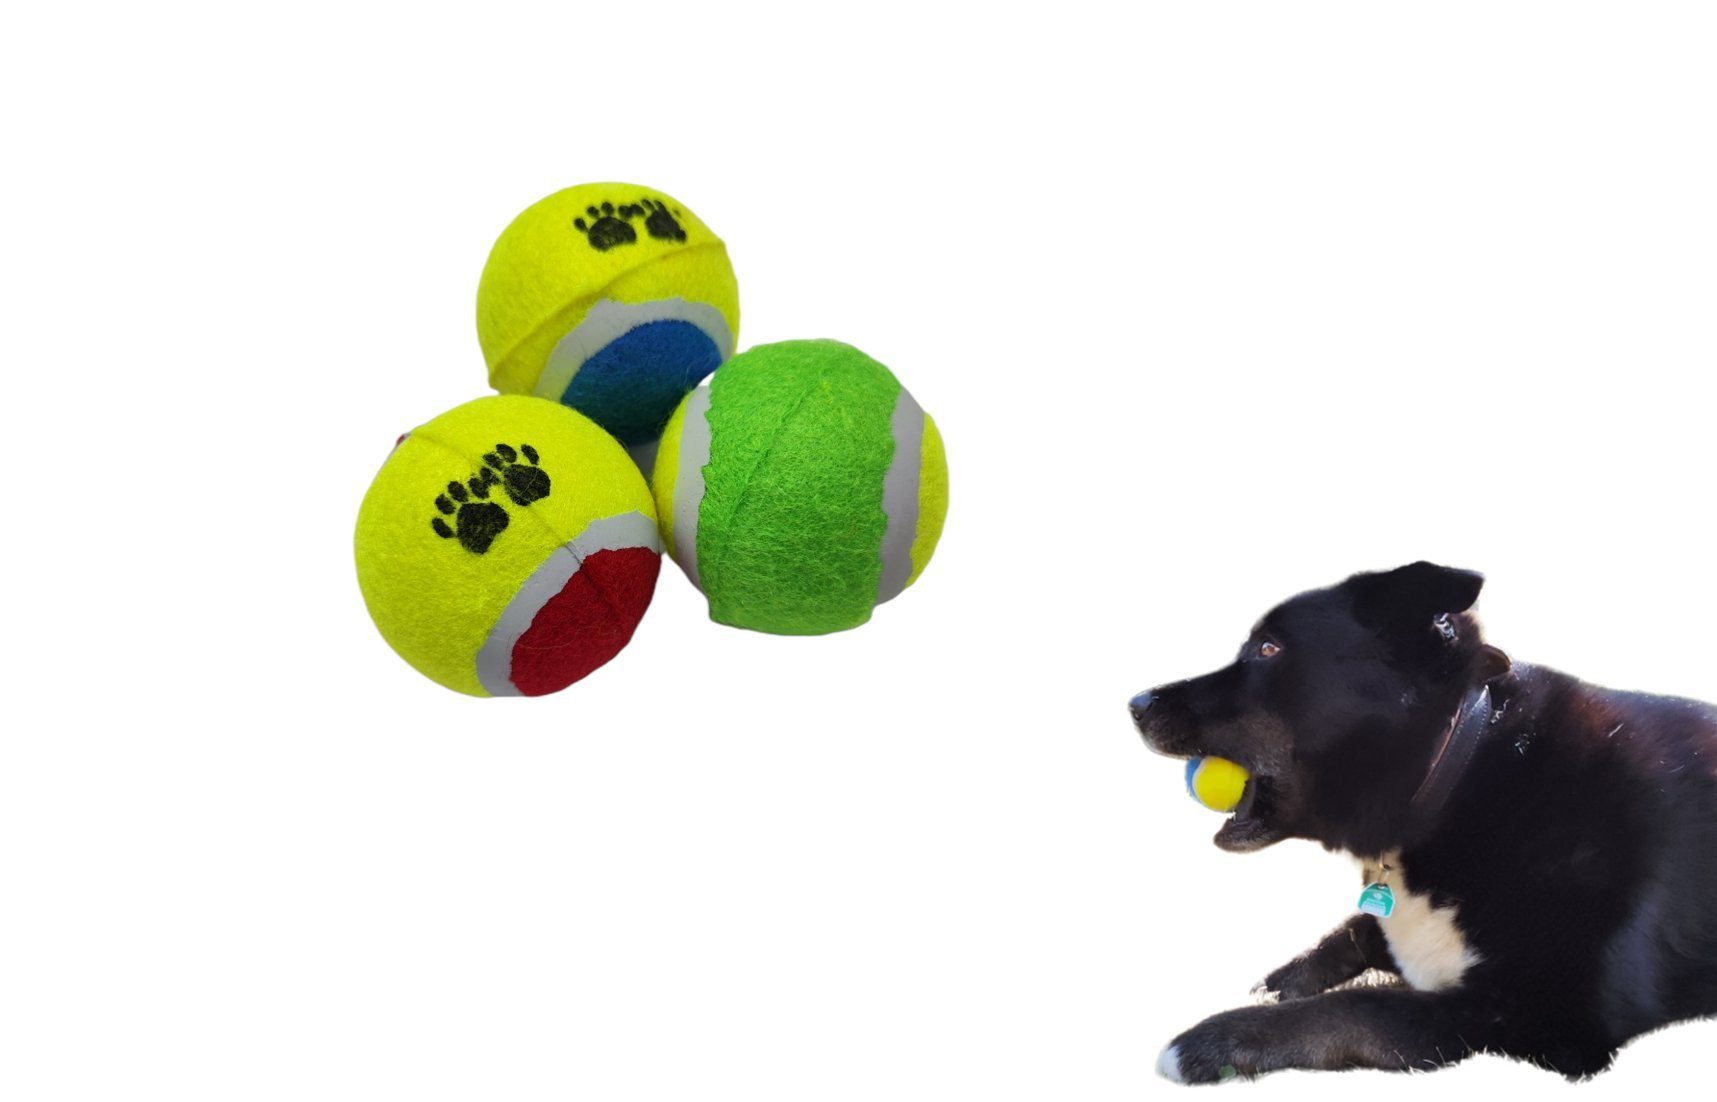 HMH-Shop Tierball Hundebälle bunt Hundespielzeug Haustier Katze Ball Spielen Hund Tennisball Dog Toys Hundeball Spaß Agility Training Ausdauer auspowern Tennisbälle Ø ~6,5cm Helle Farben gut auffindbar, Helle Farben, gut auffindbar 9 Bälle